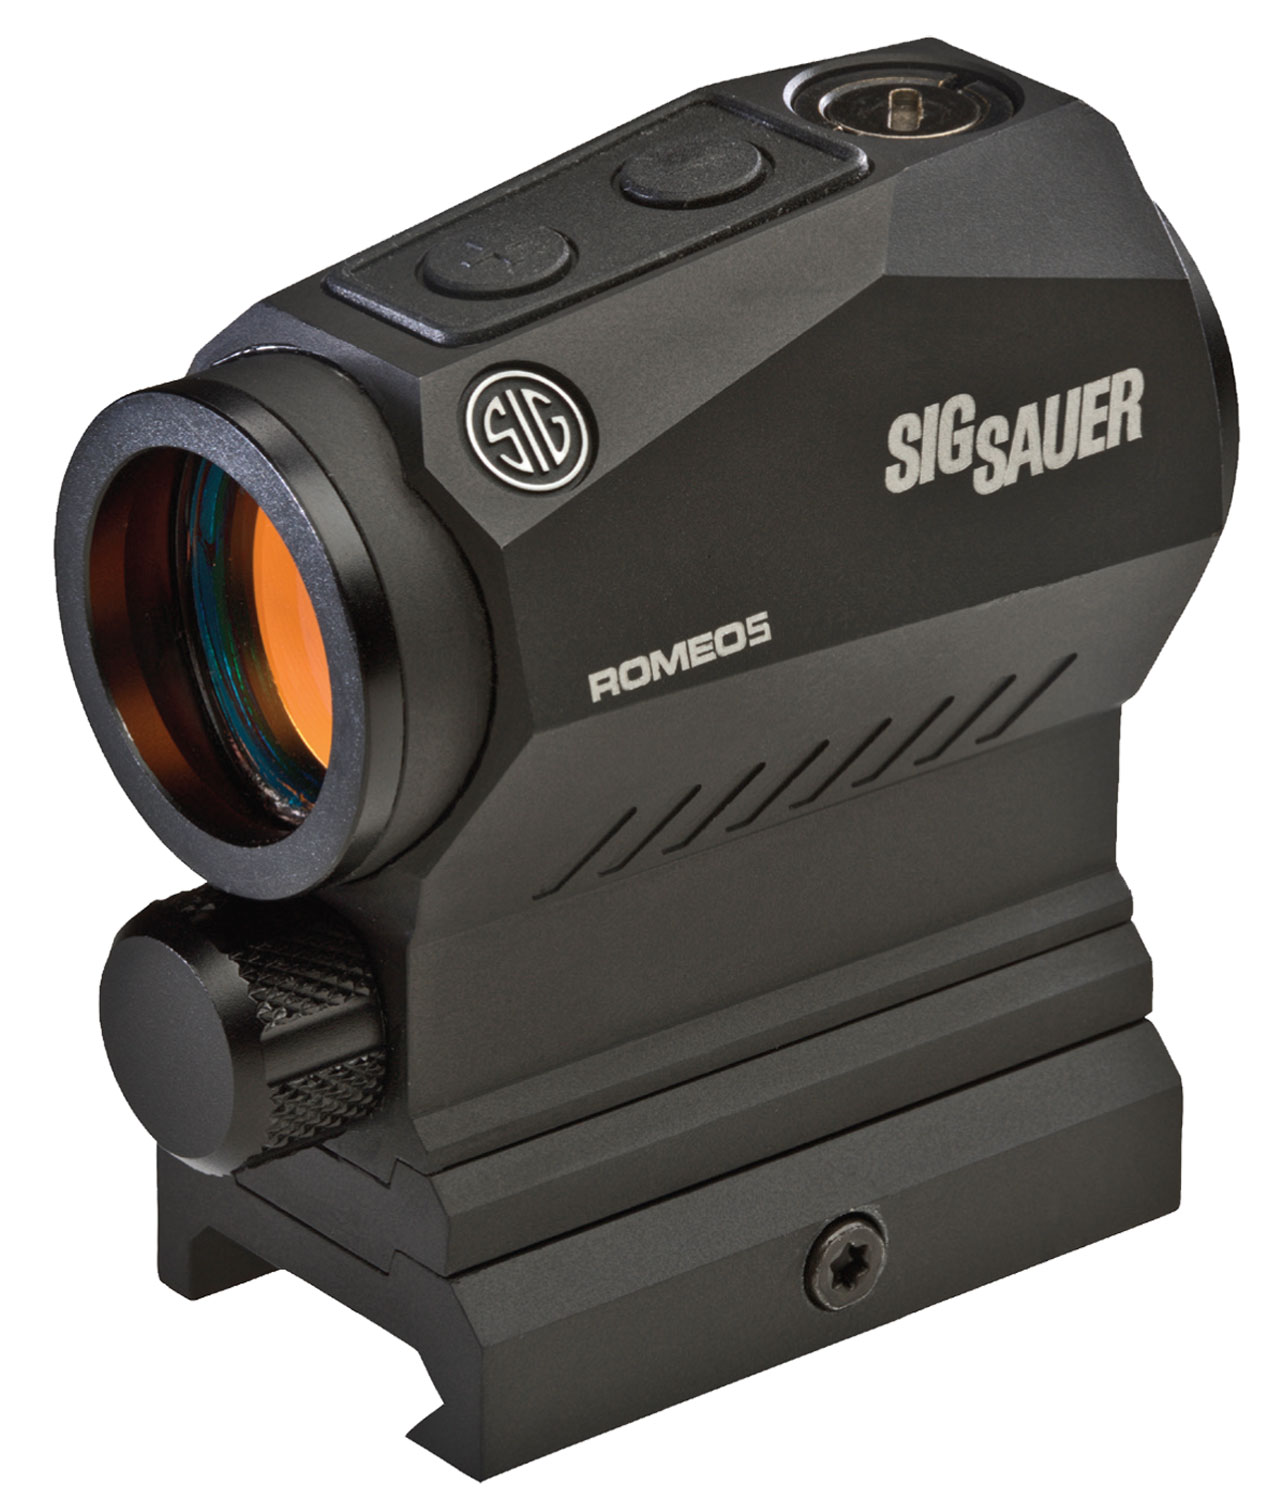 Sig Sauer ROMEO5 XDR Compact Red Dot Sight - 1x20mm 65 MOA Circle Dot Reticle